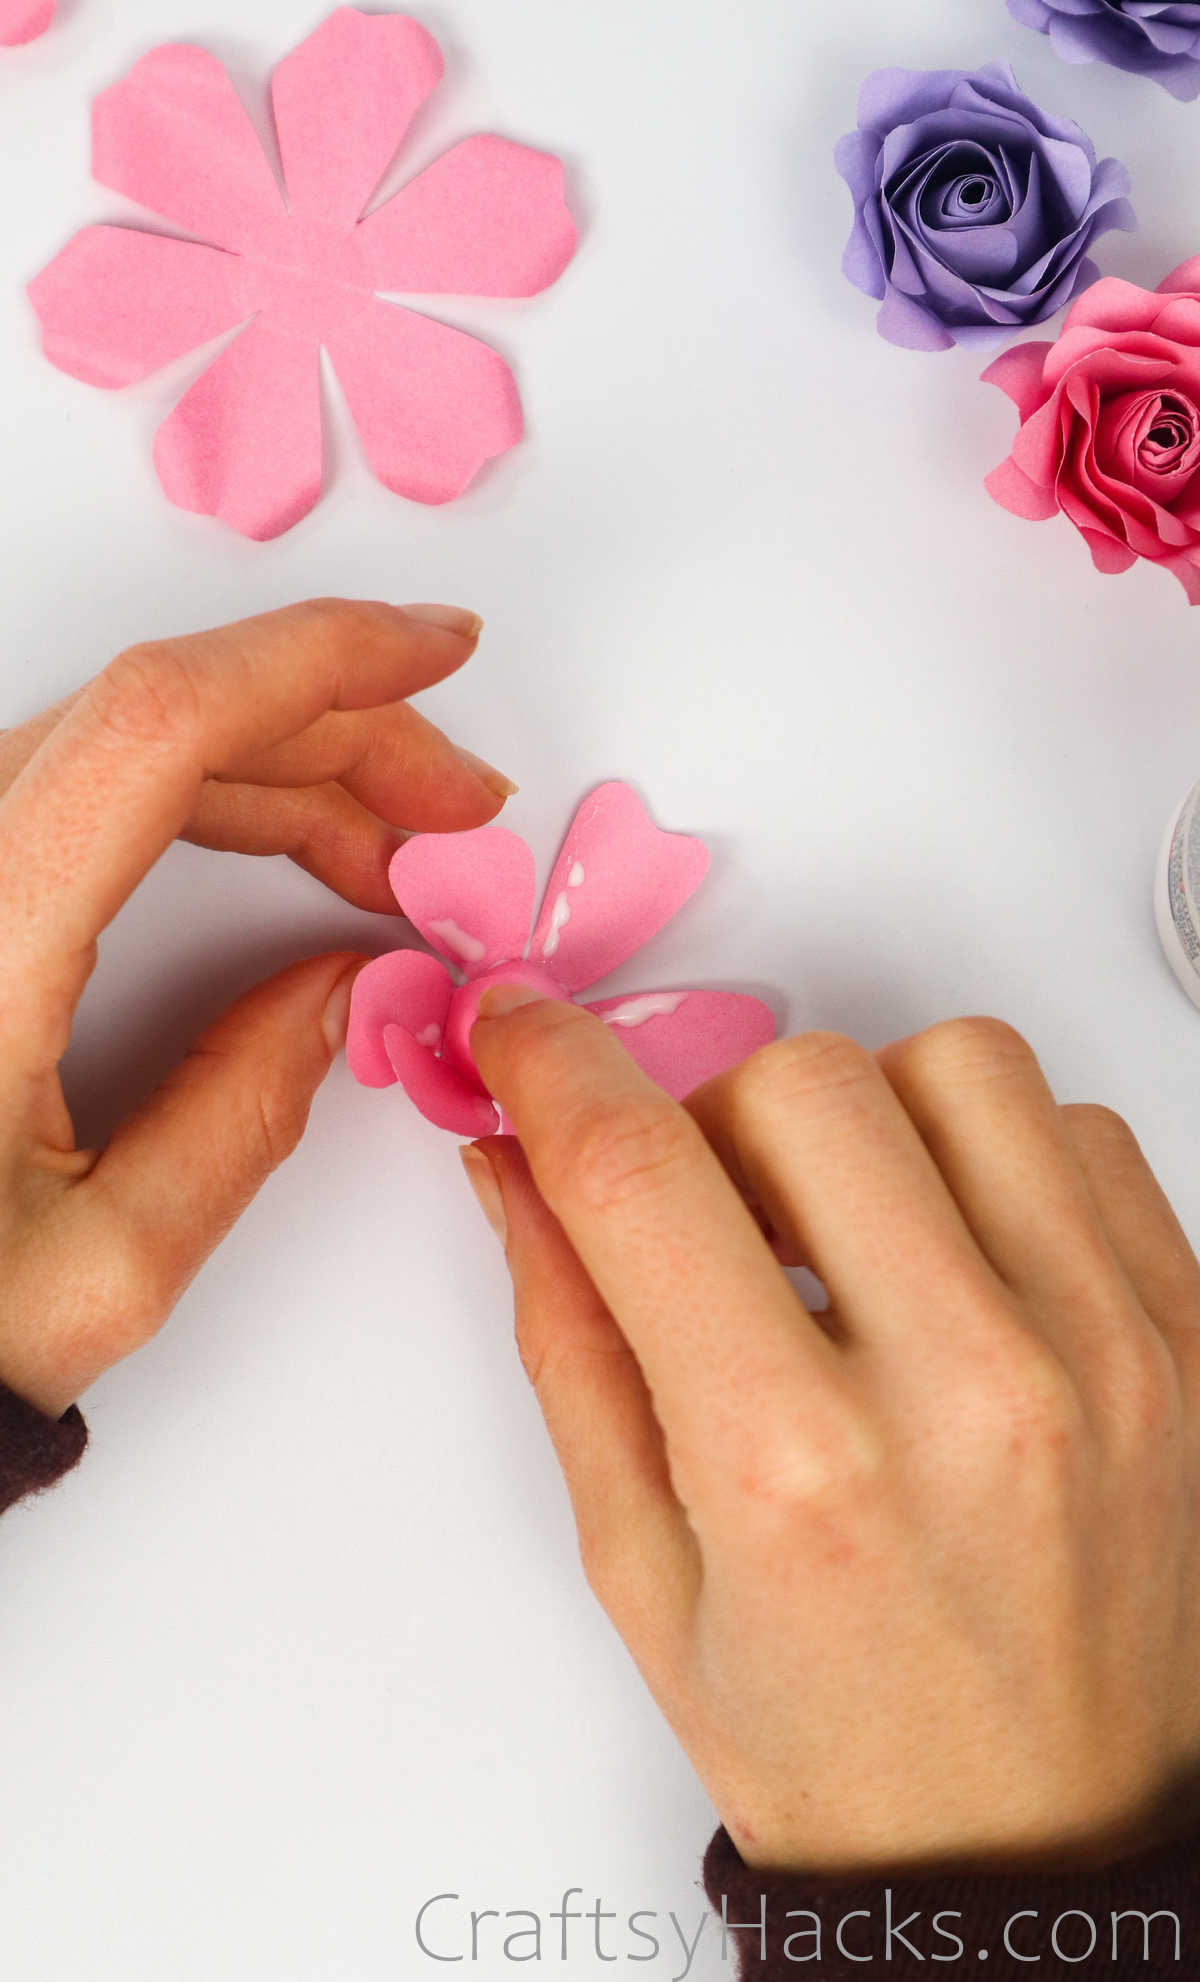 glueing petals